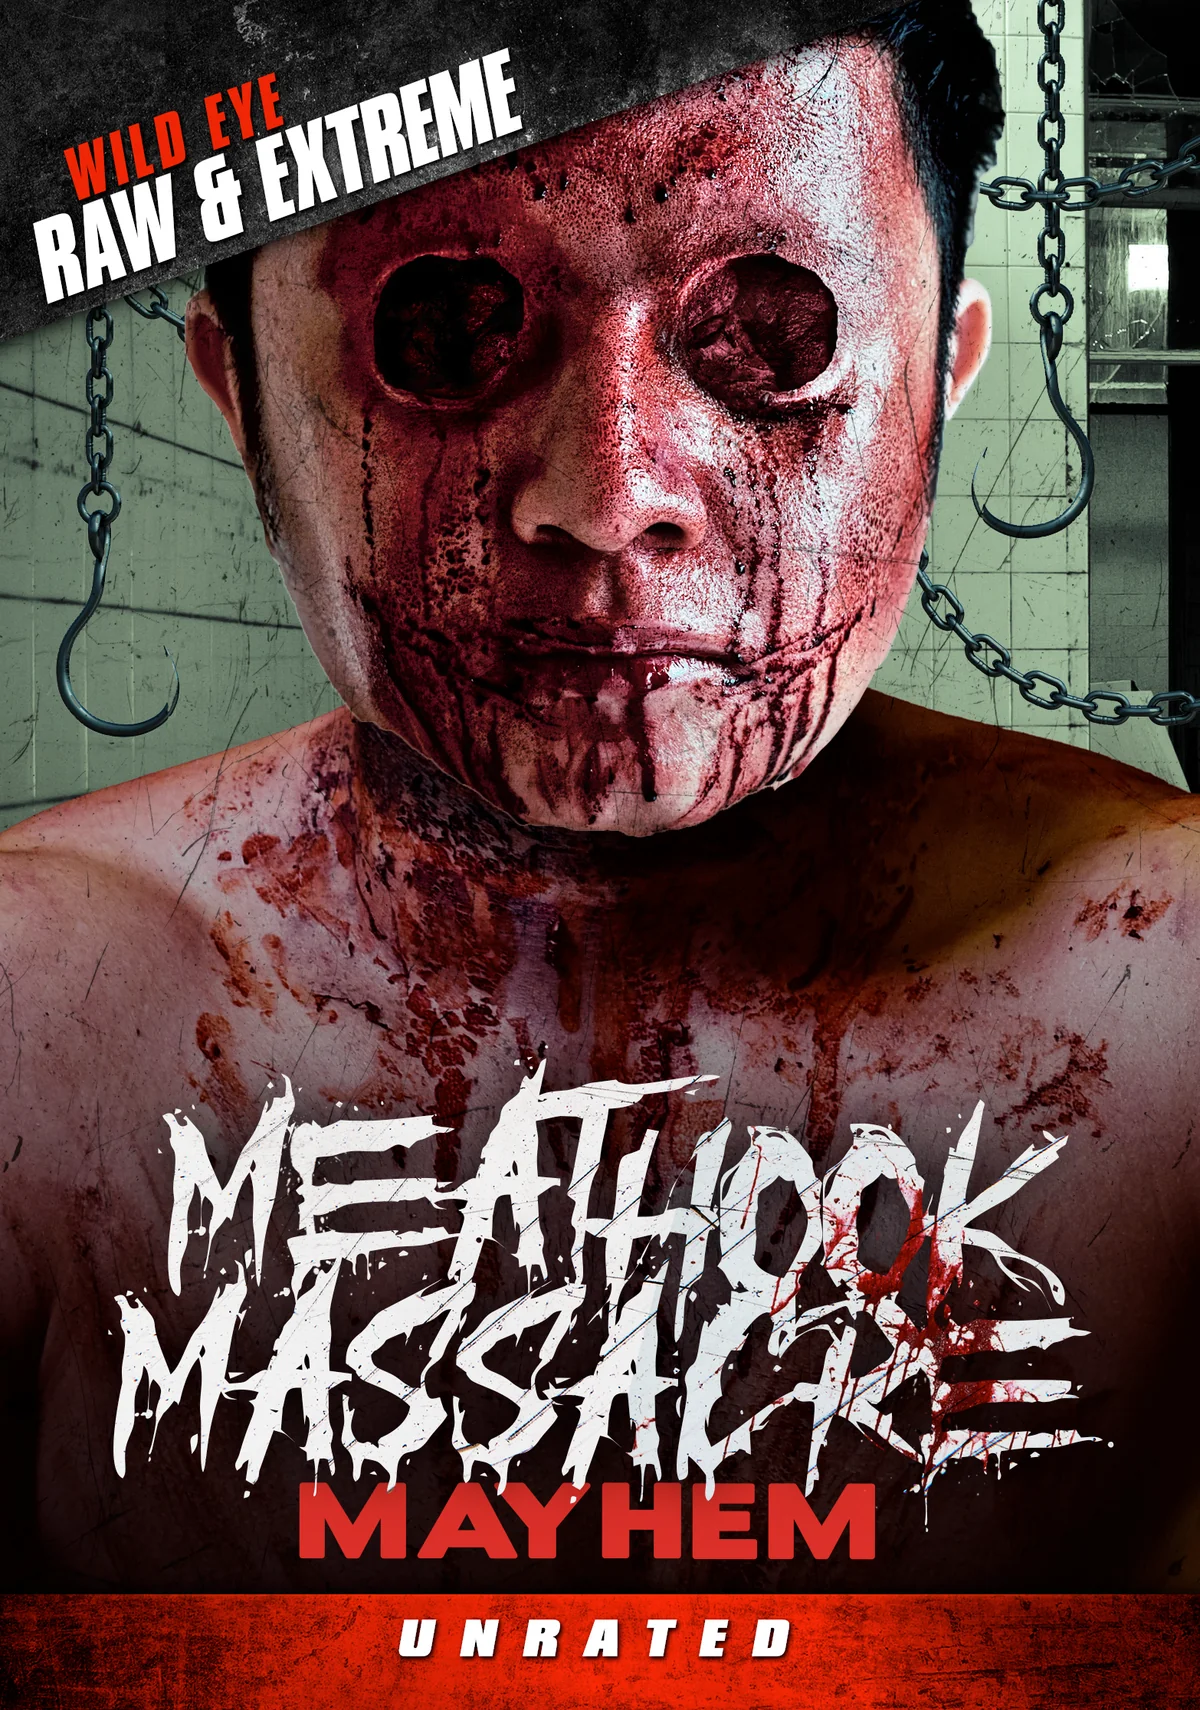 Meathook Massacre: Mayhem (DVD)